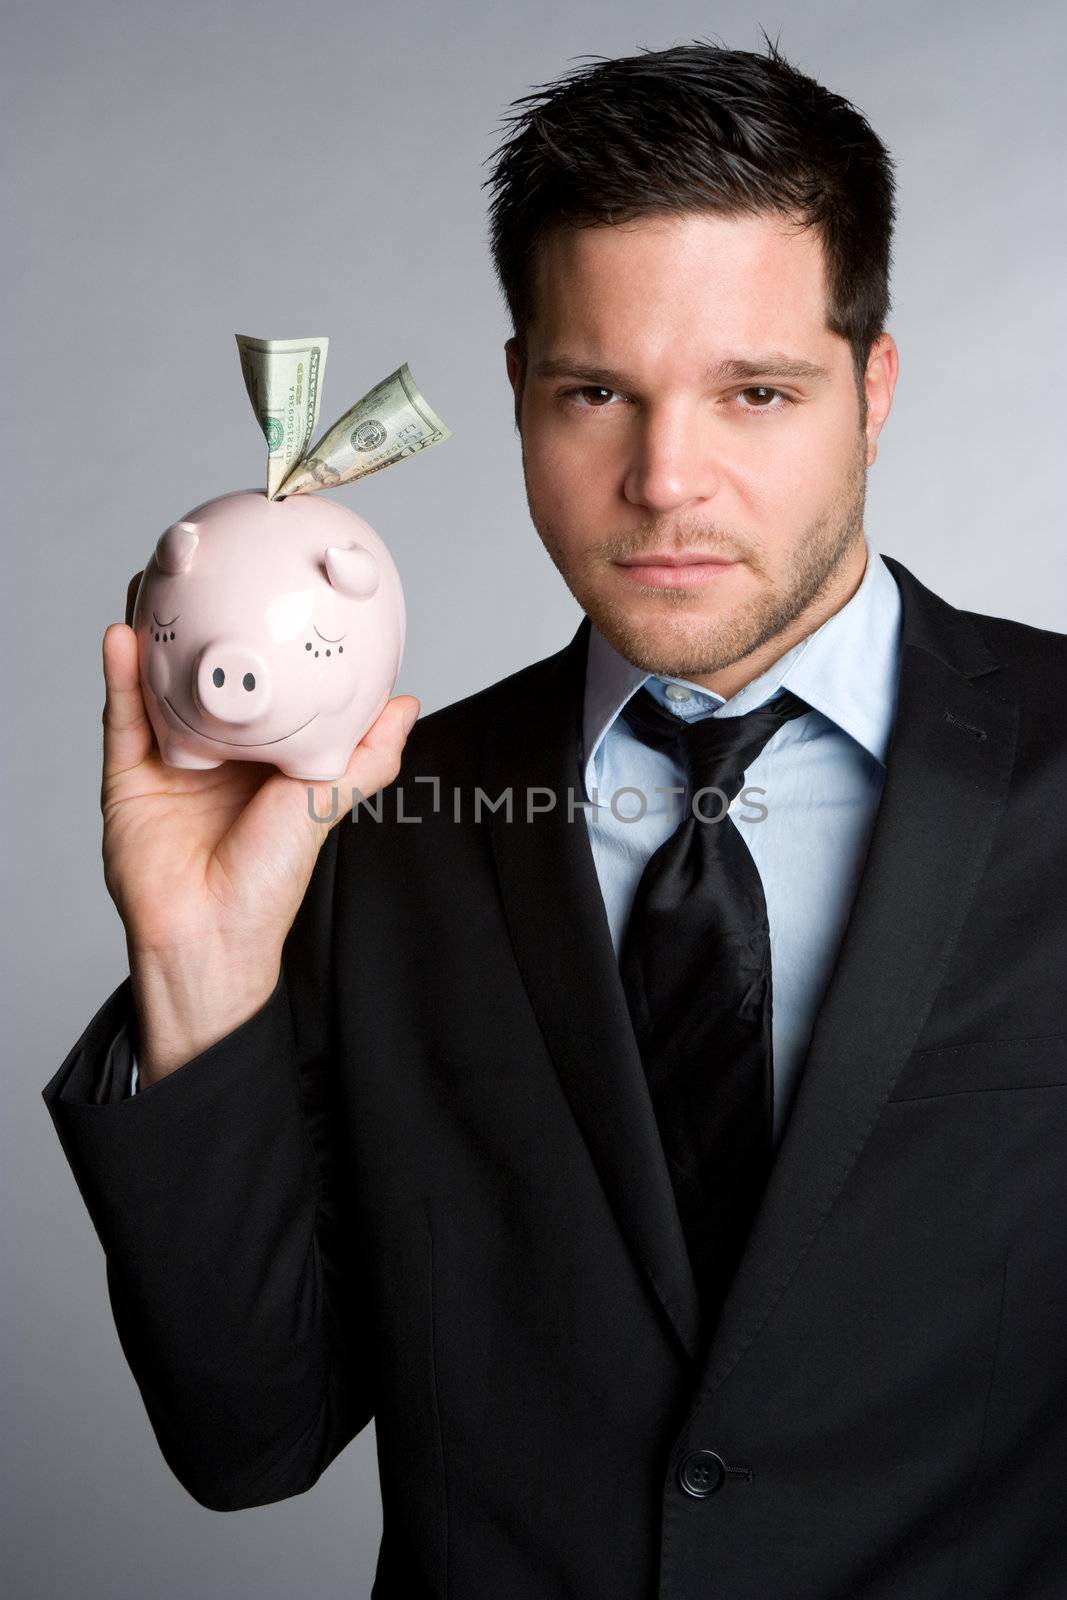 Piggy Bank Man by keeweeboy